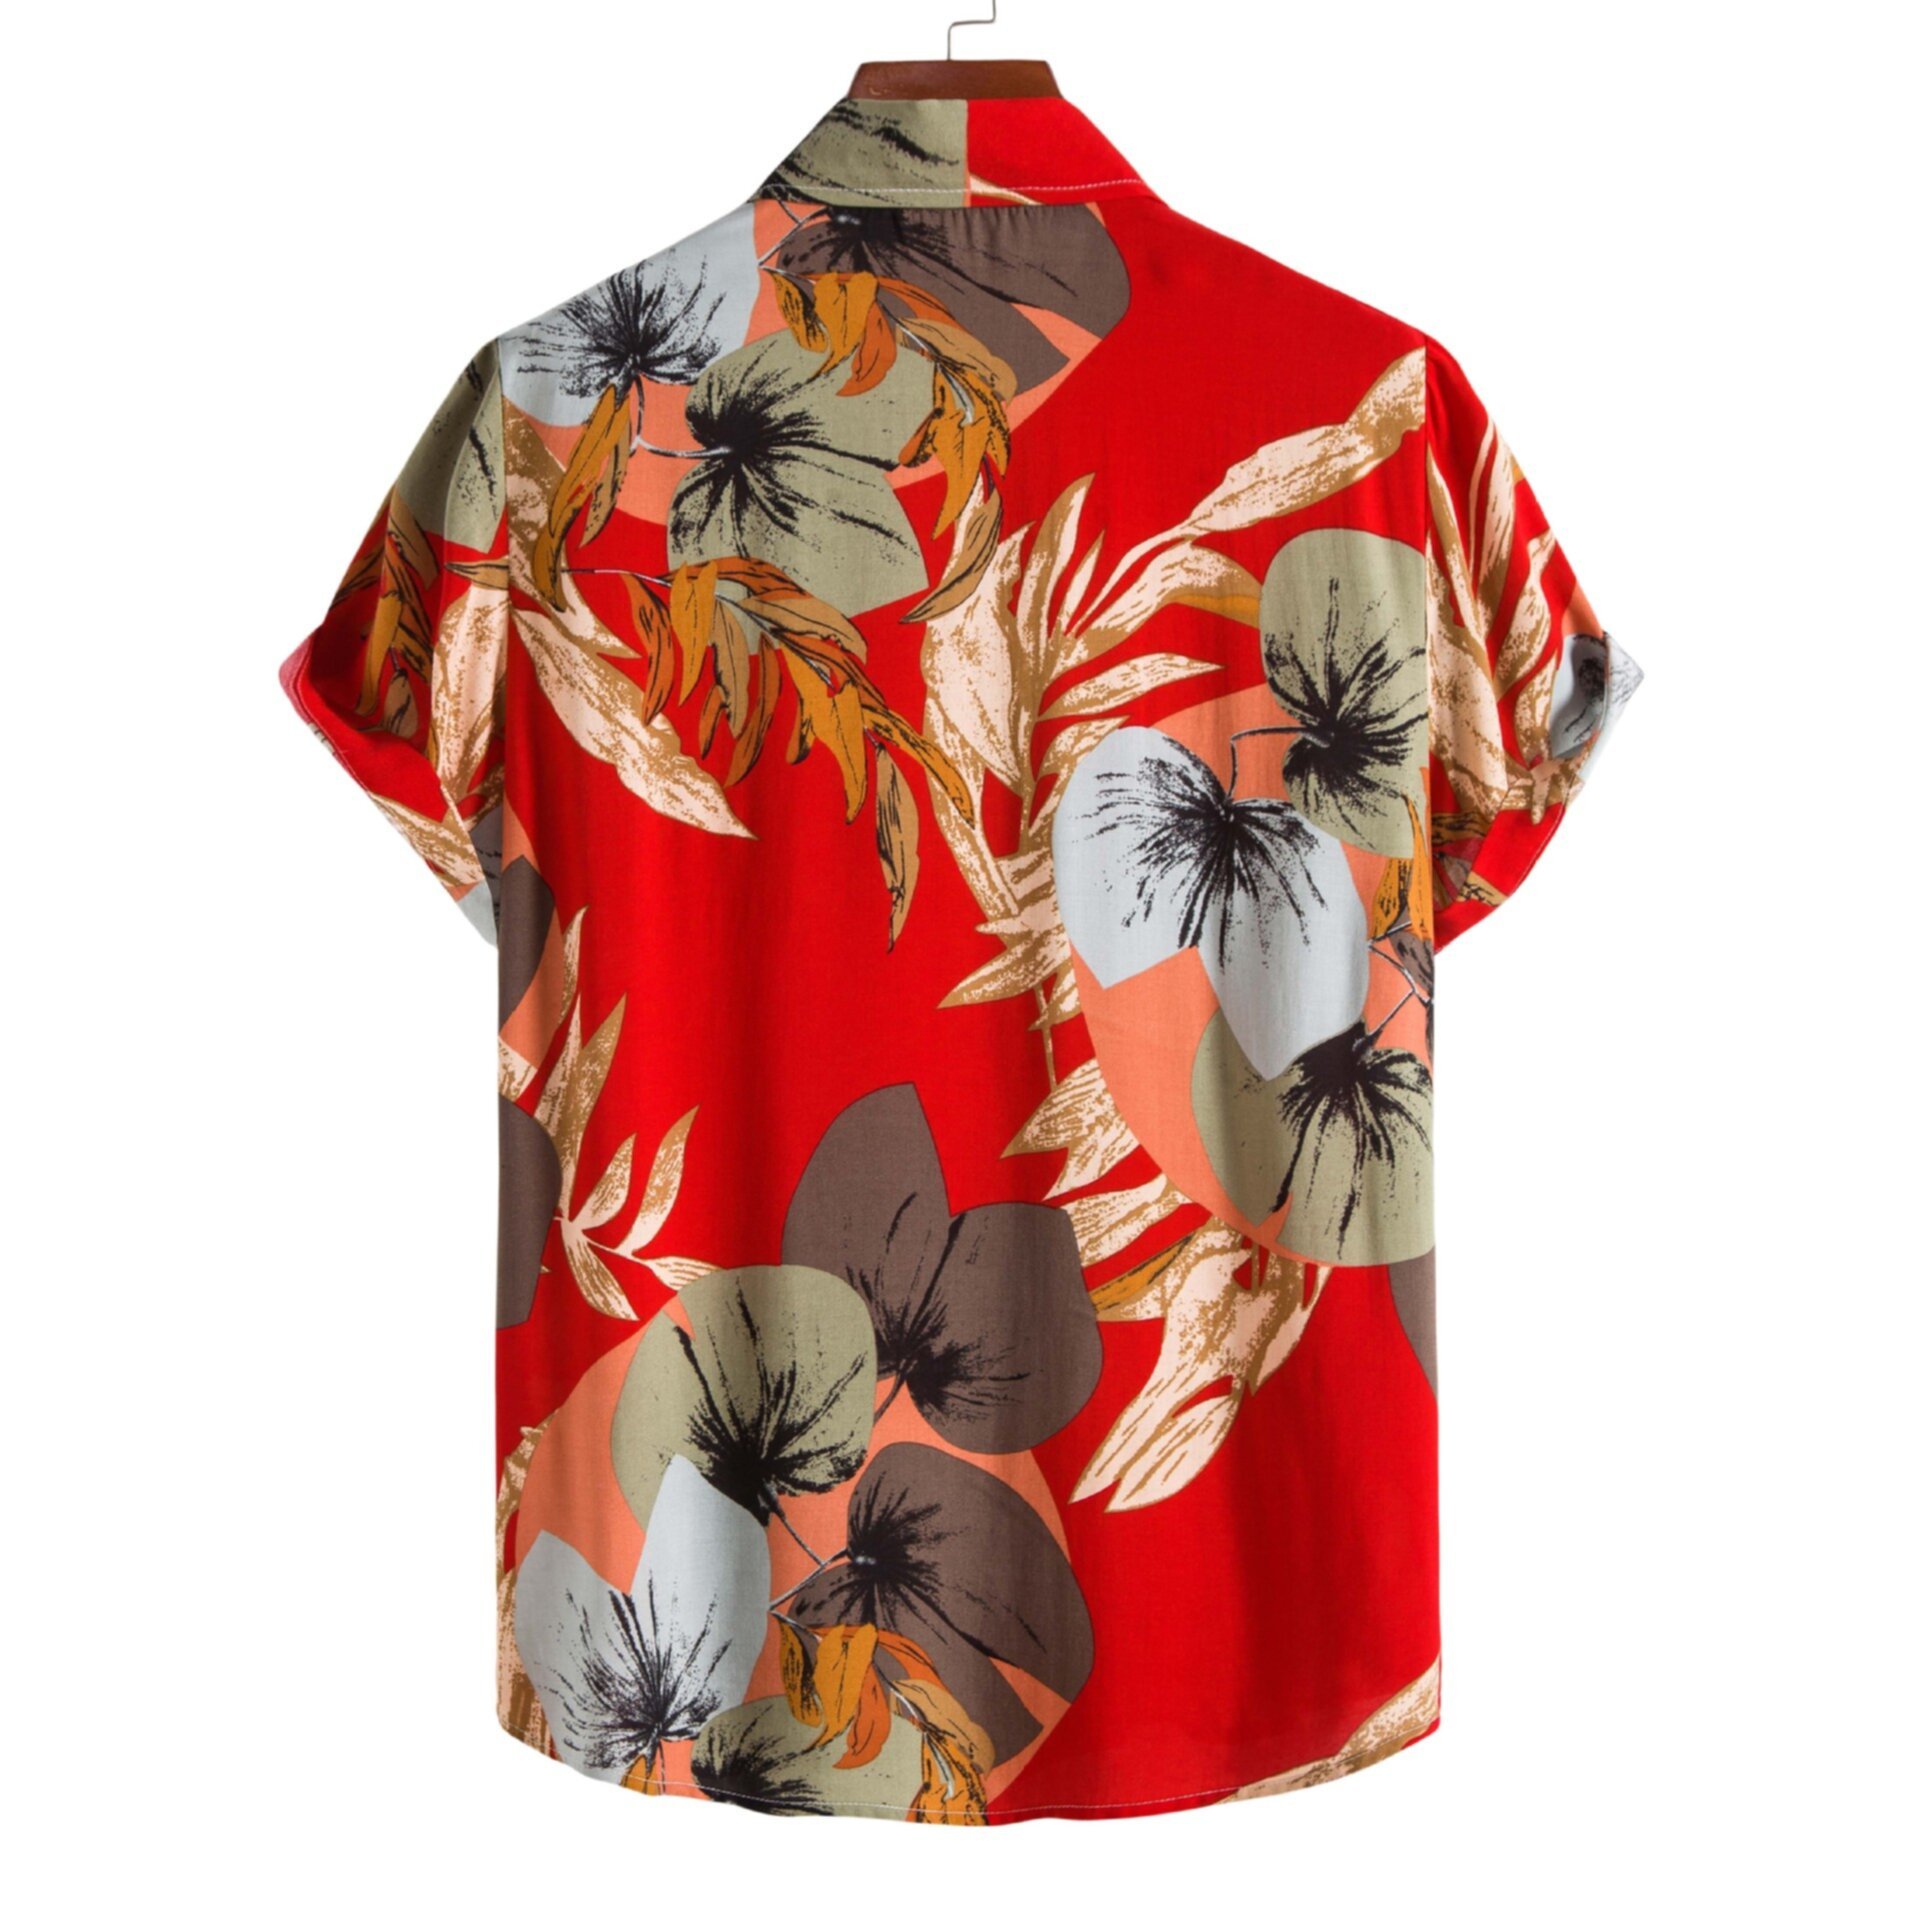 Plant flower pattern men's casual short sleeves shirt